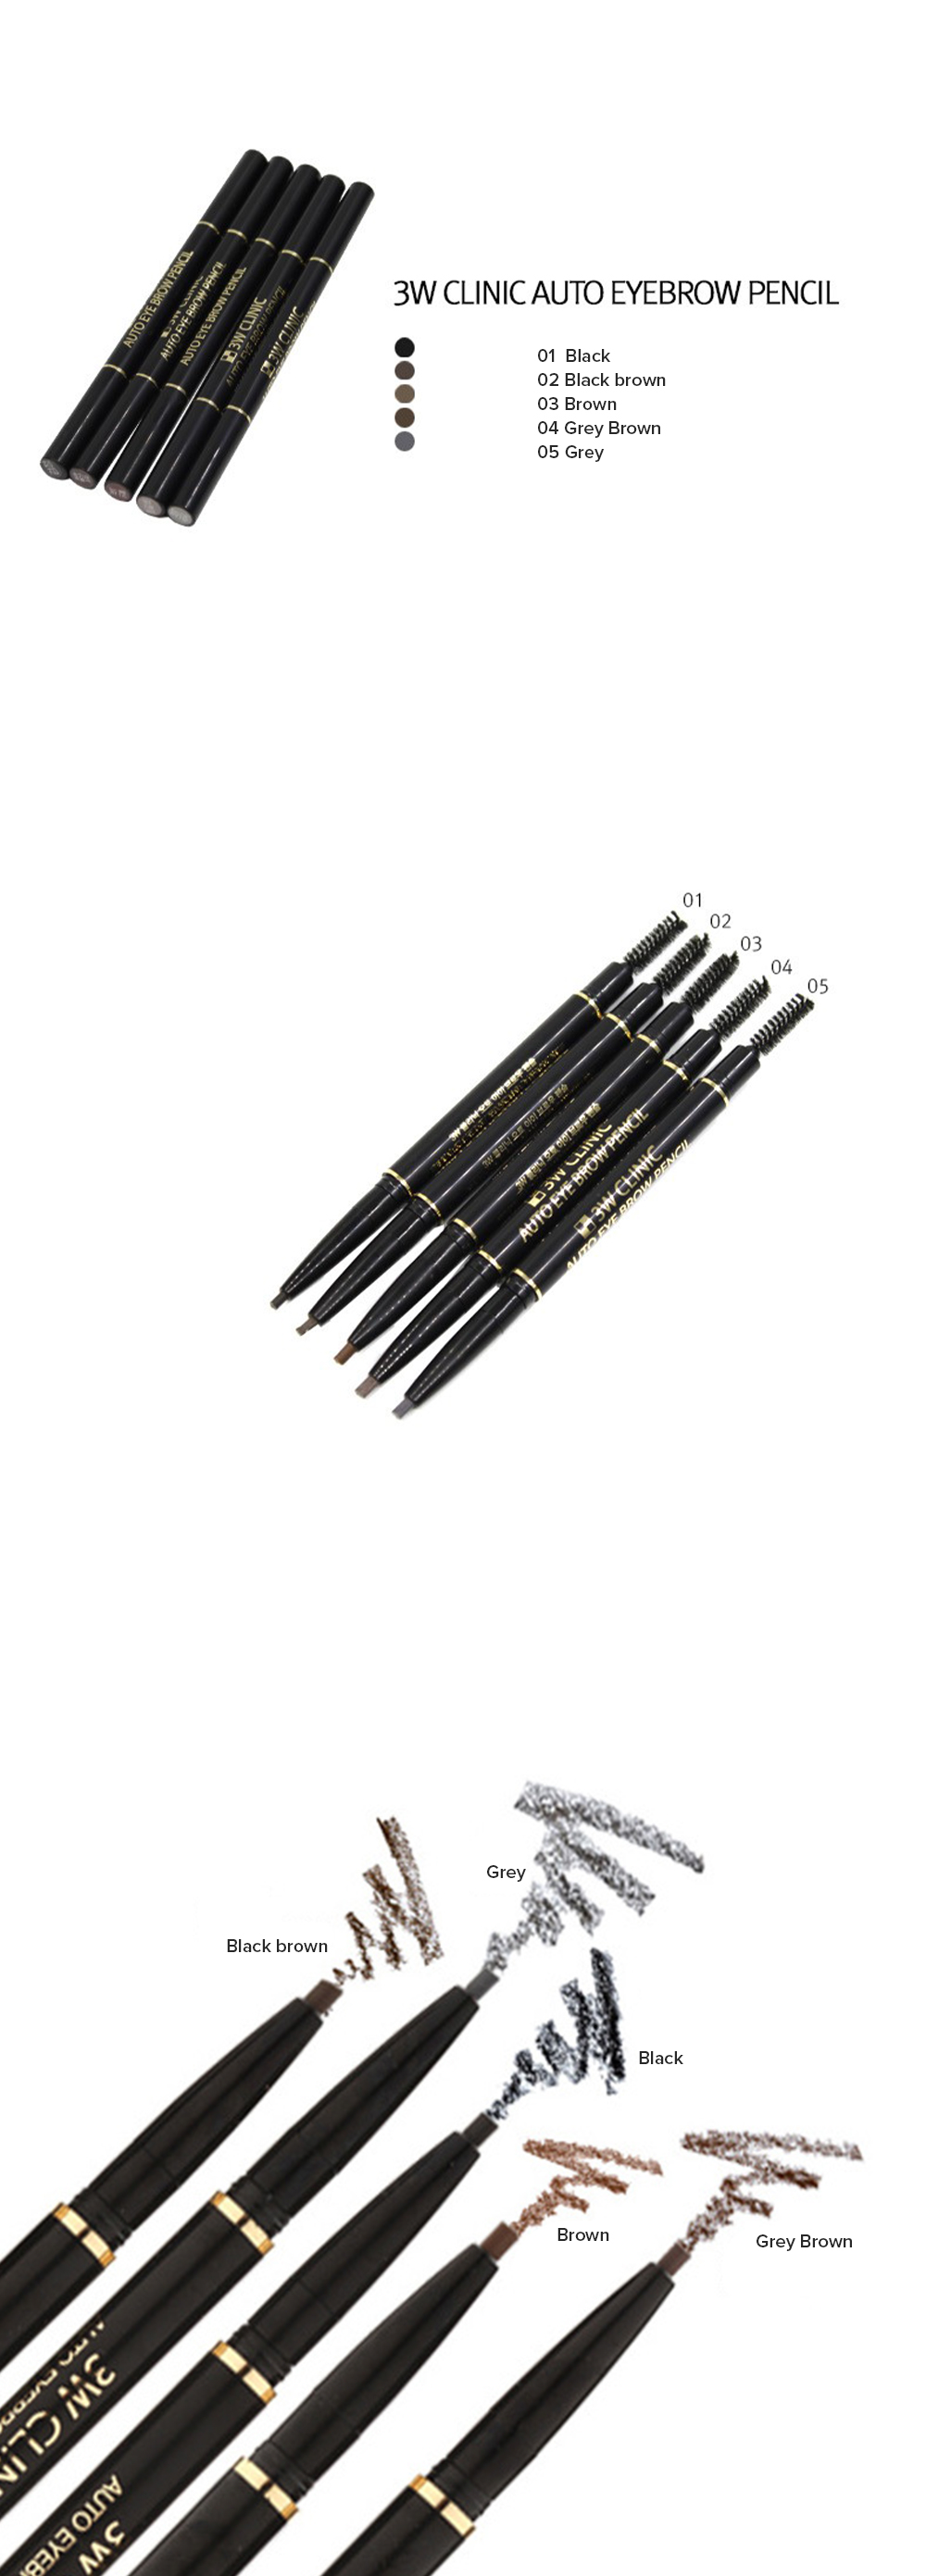 [3W CLINIC] Auto Eyebrow Pencil - 5 Shades